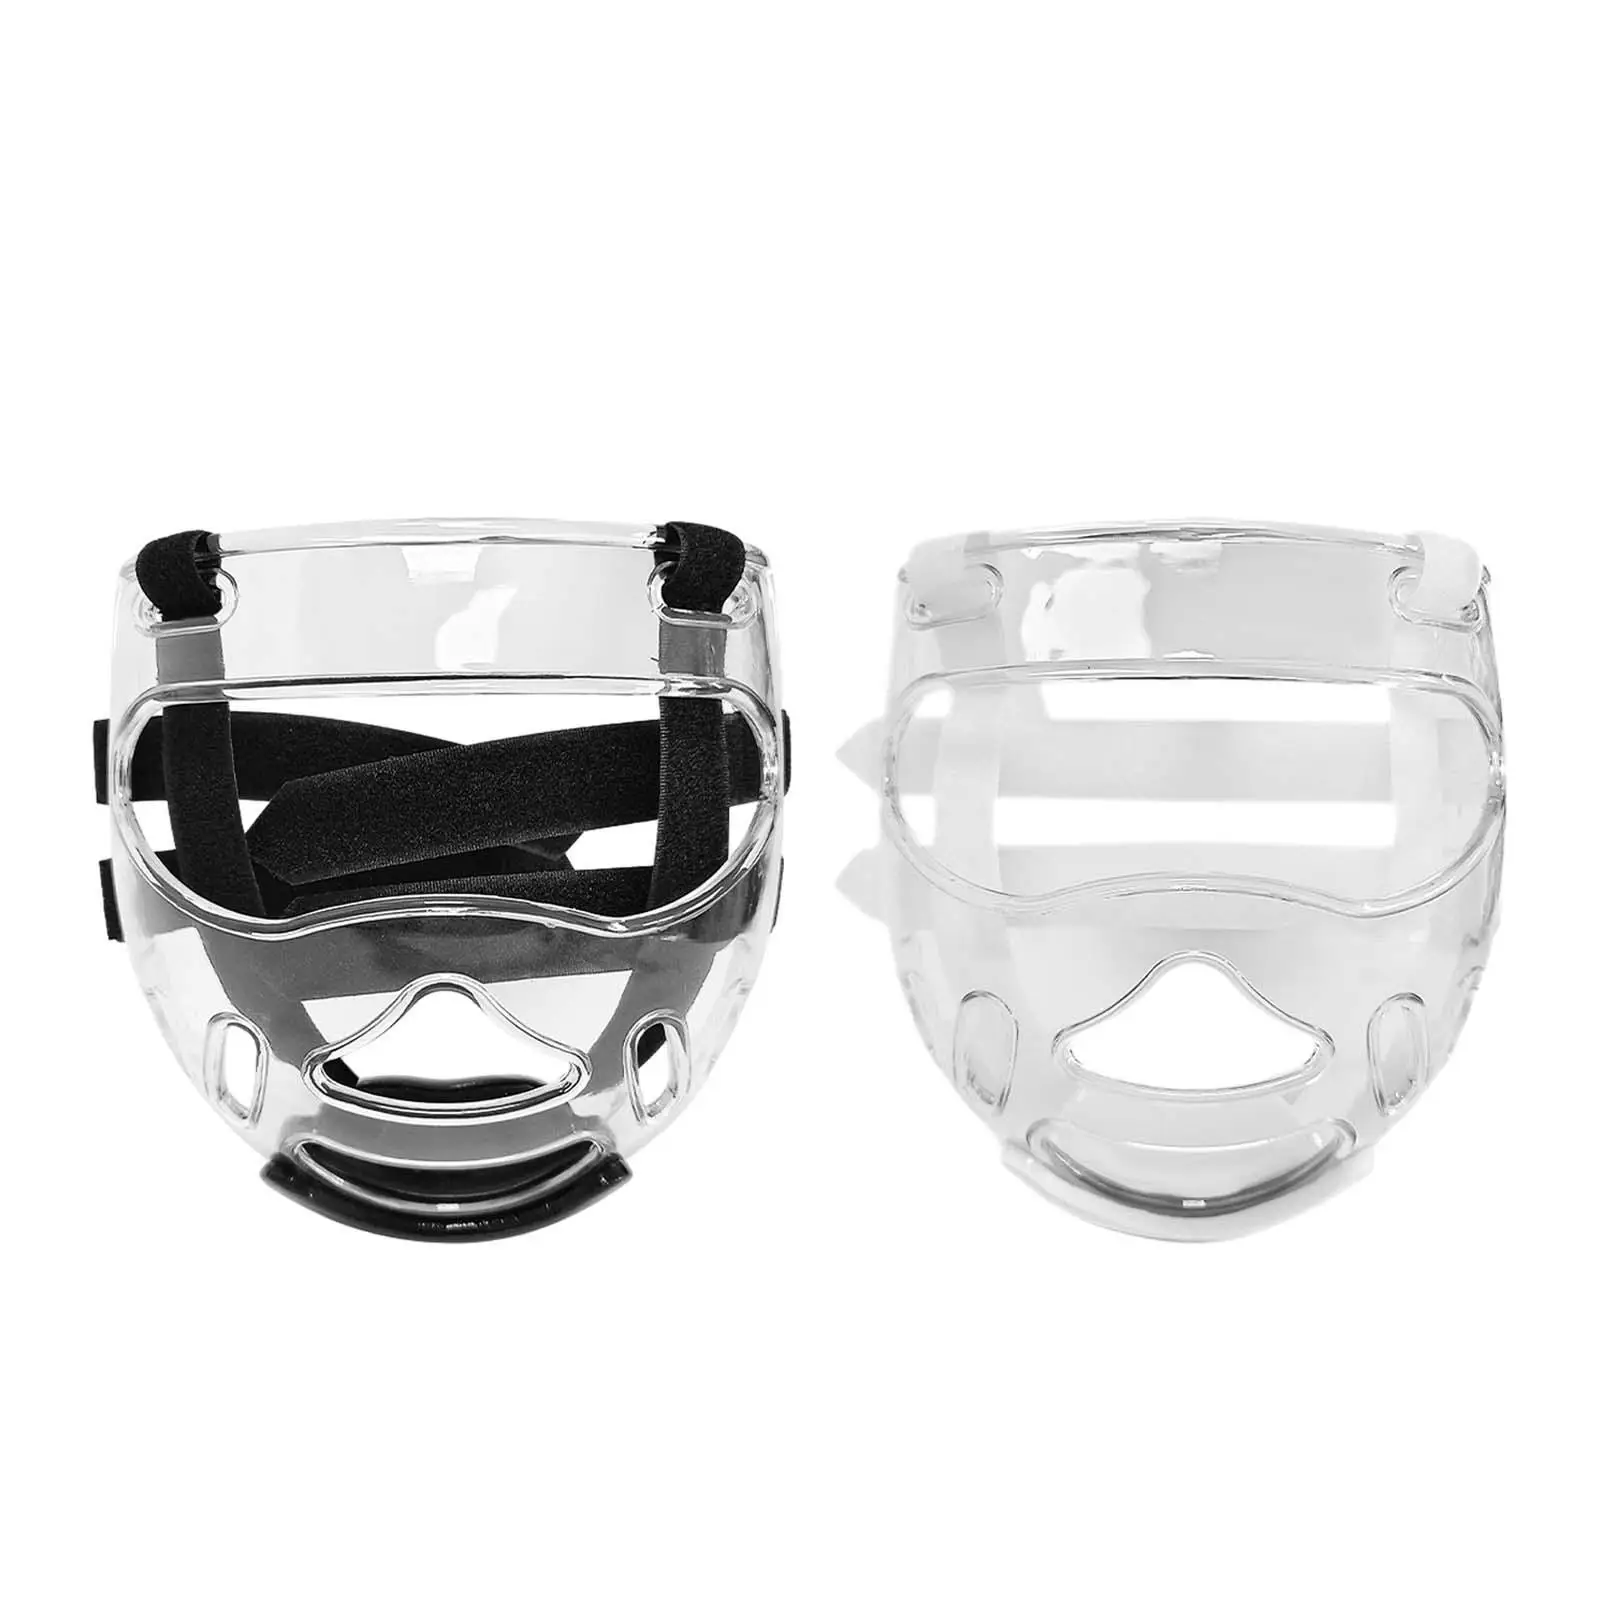 Taekwondo Face Mask Taekwondo Face Shield Protective Gear Face Guard for Martial Arts Wrestling Sparring Kickboxing Grappling